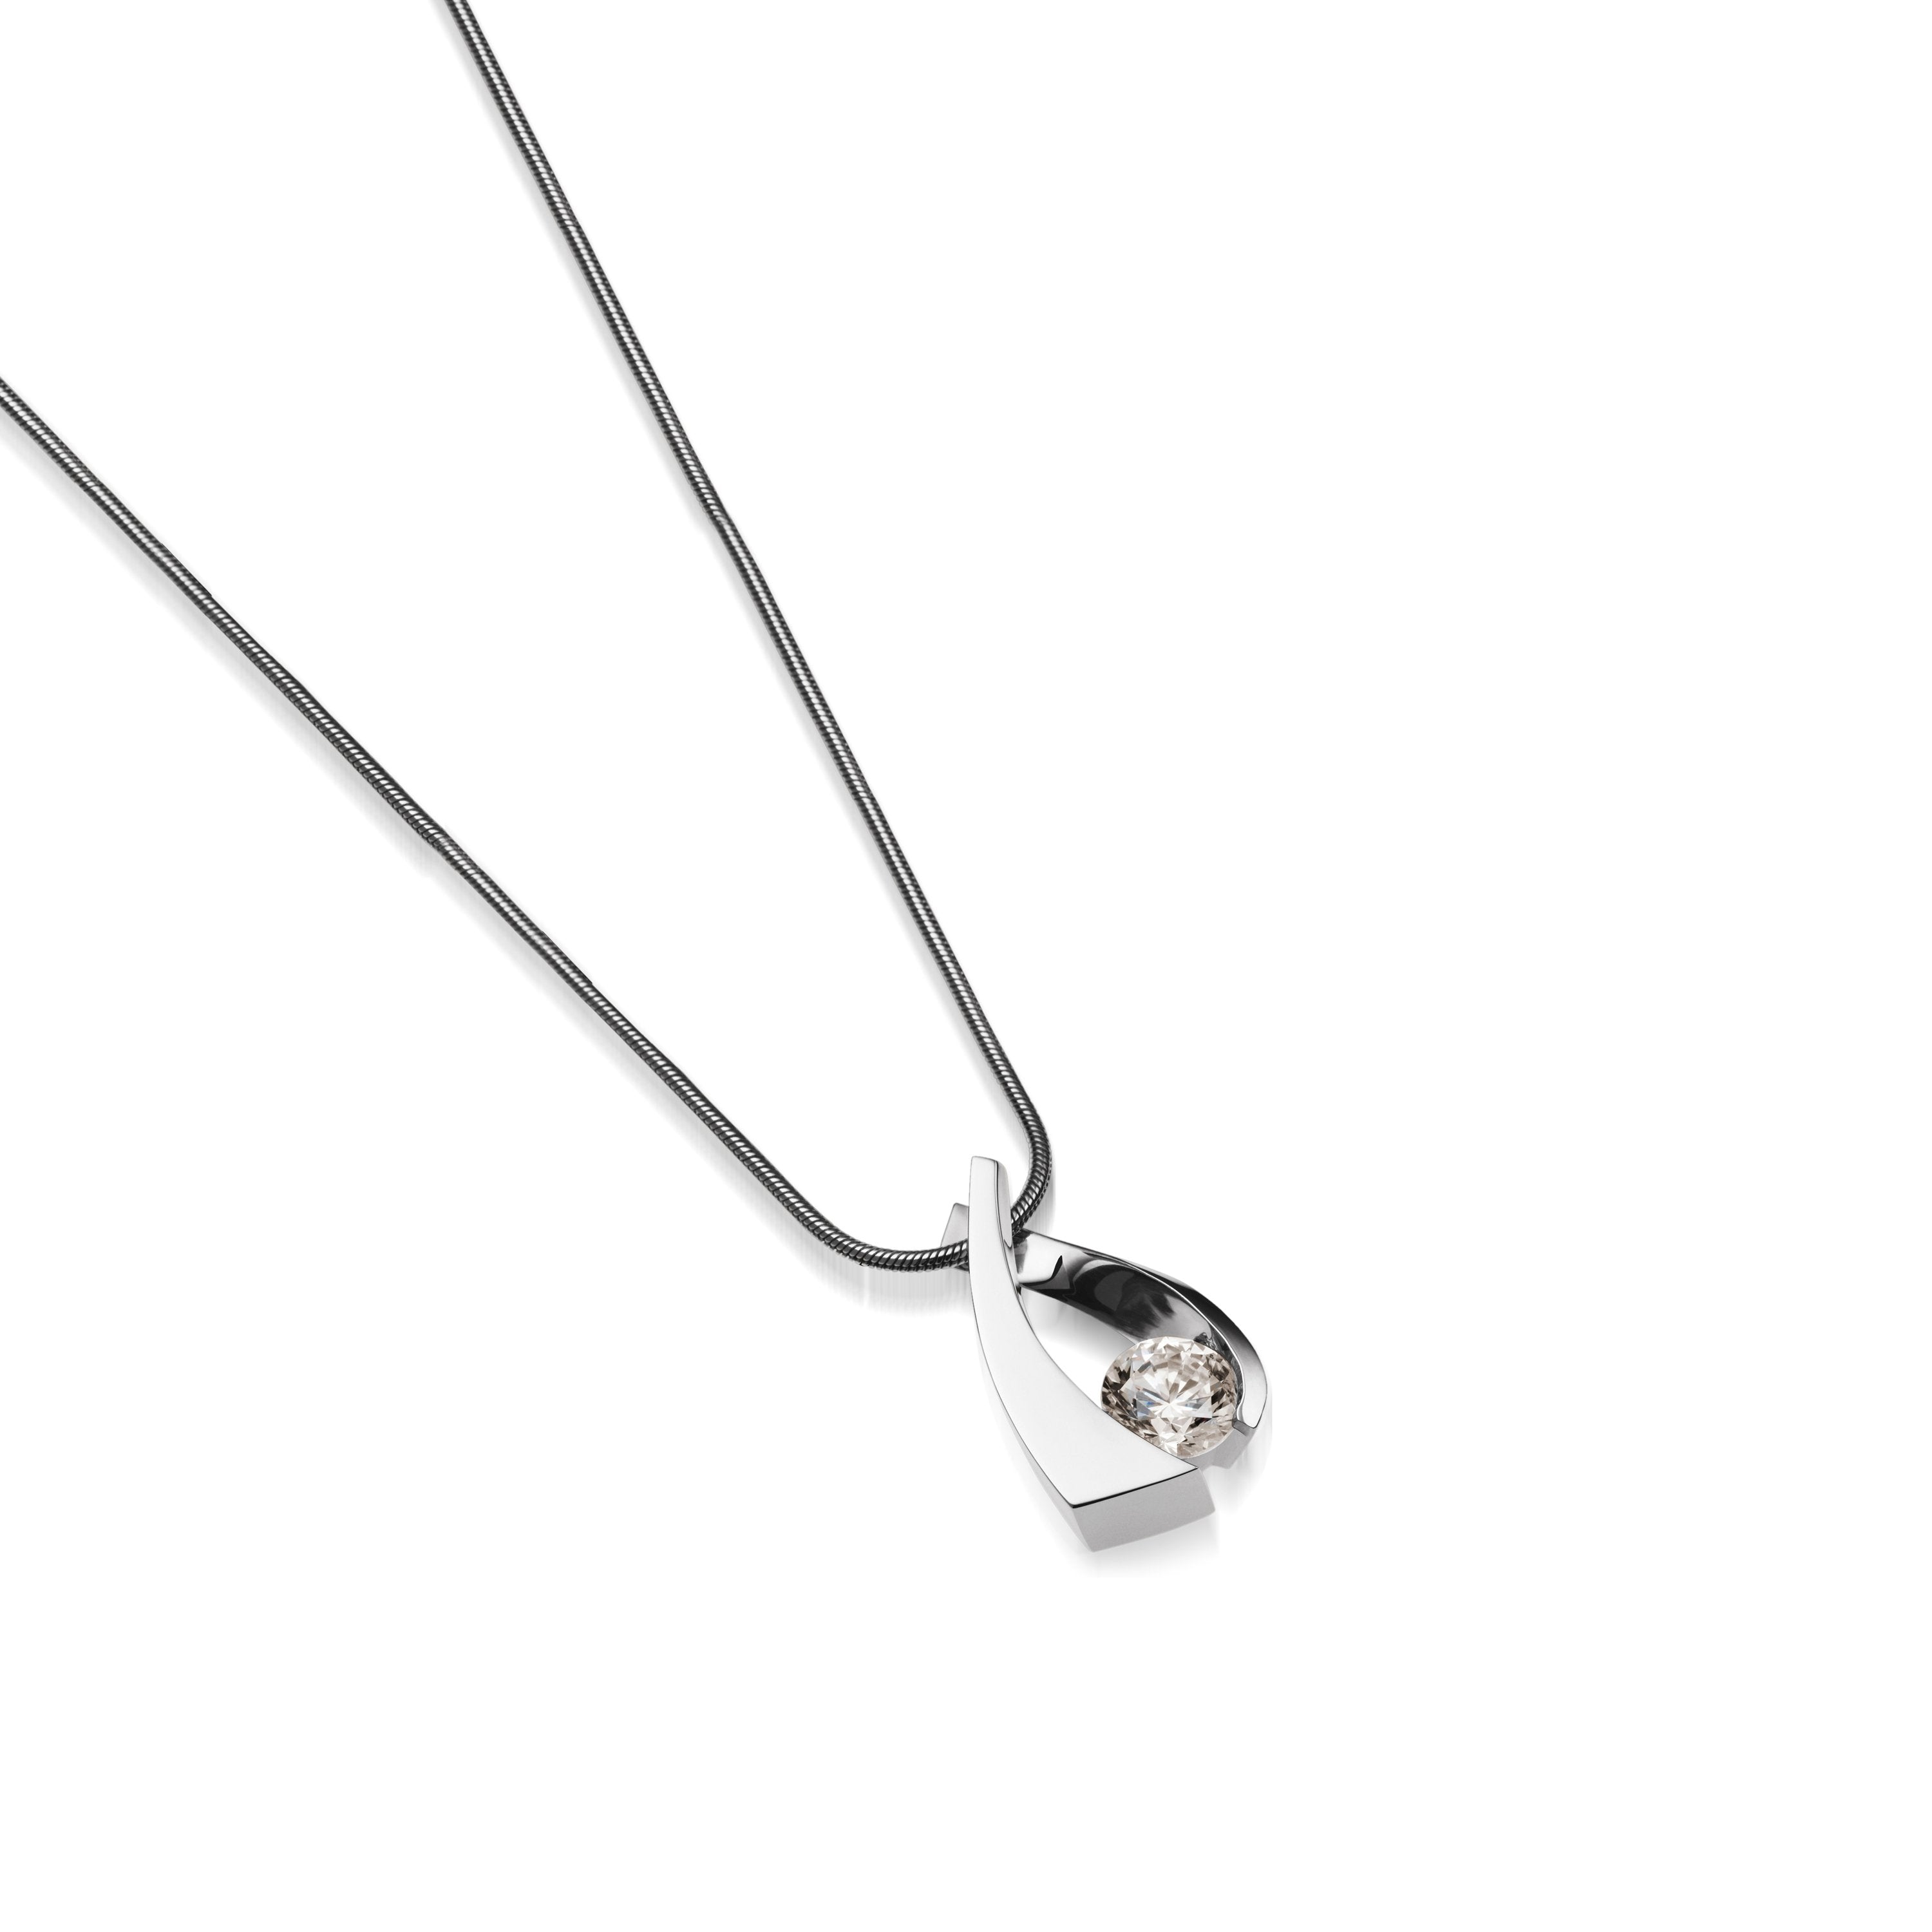 Silver solitaire diamond pendant necklace